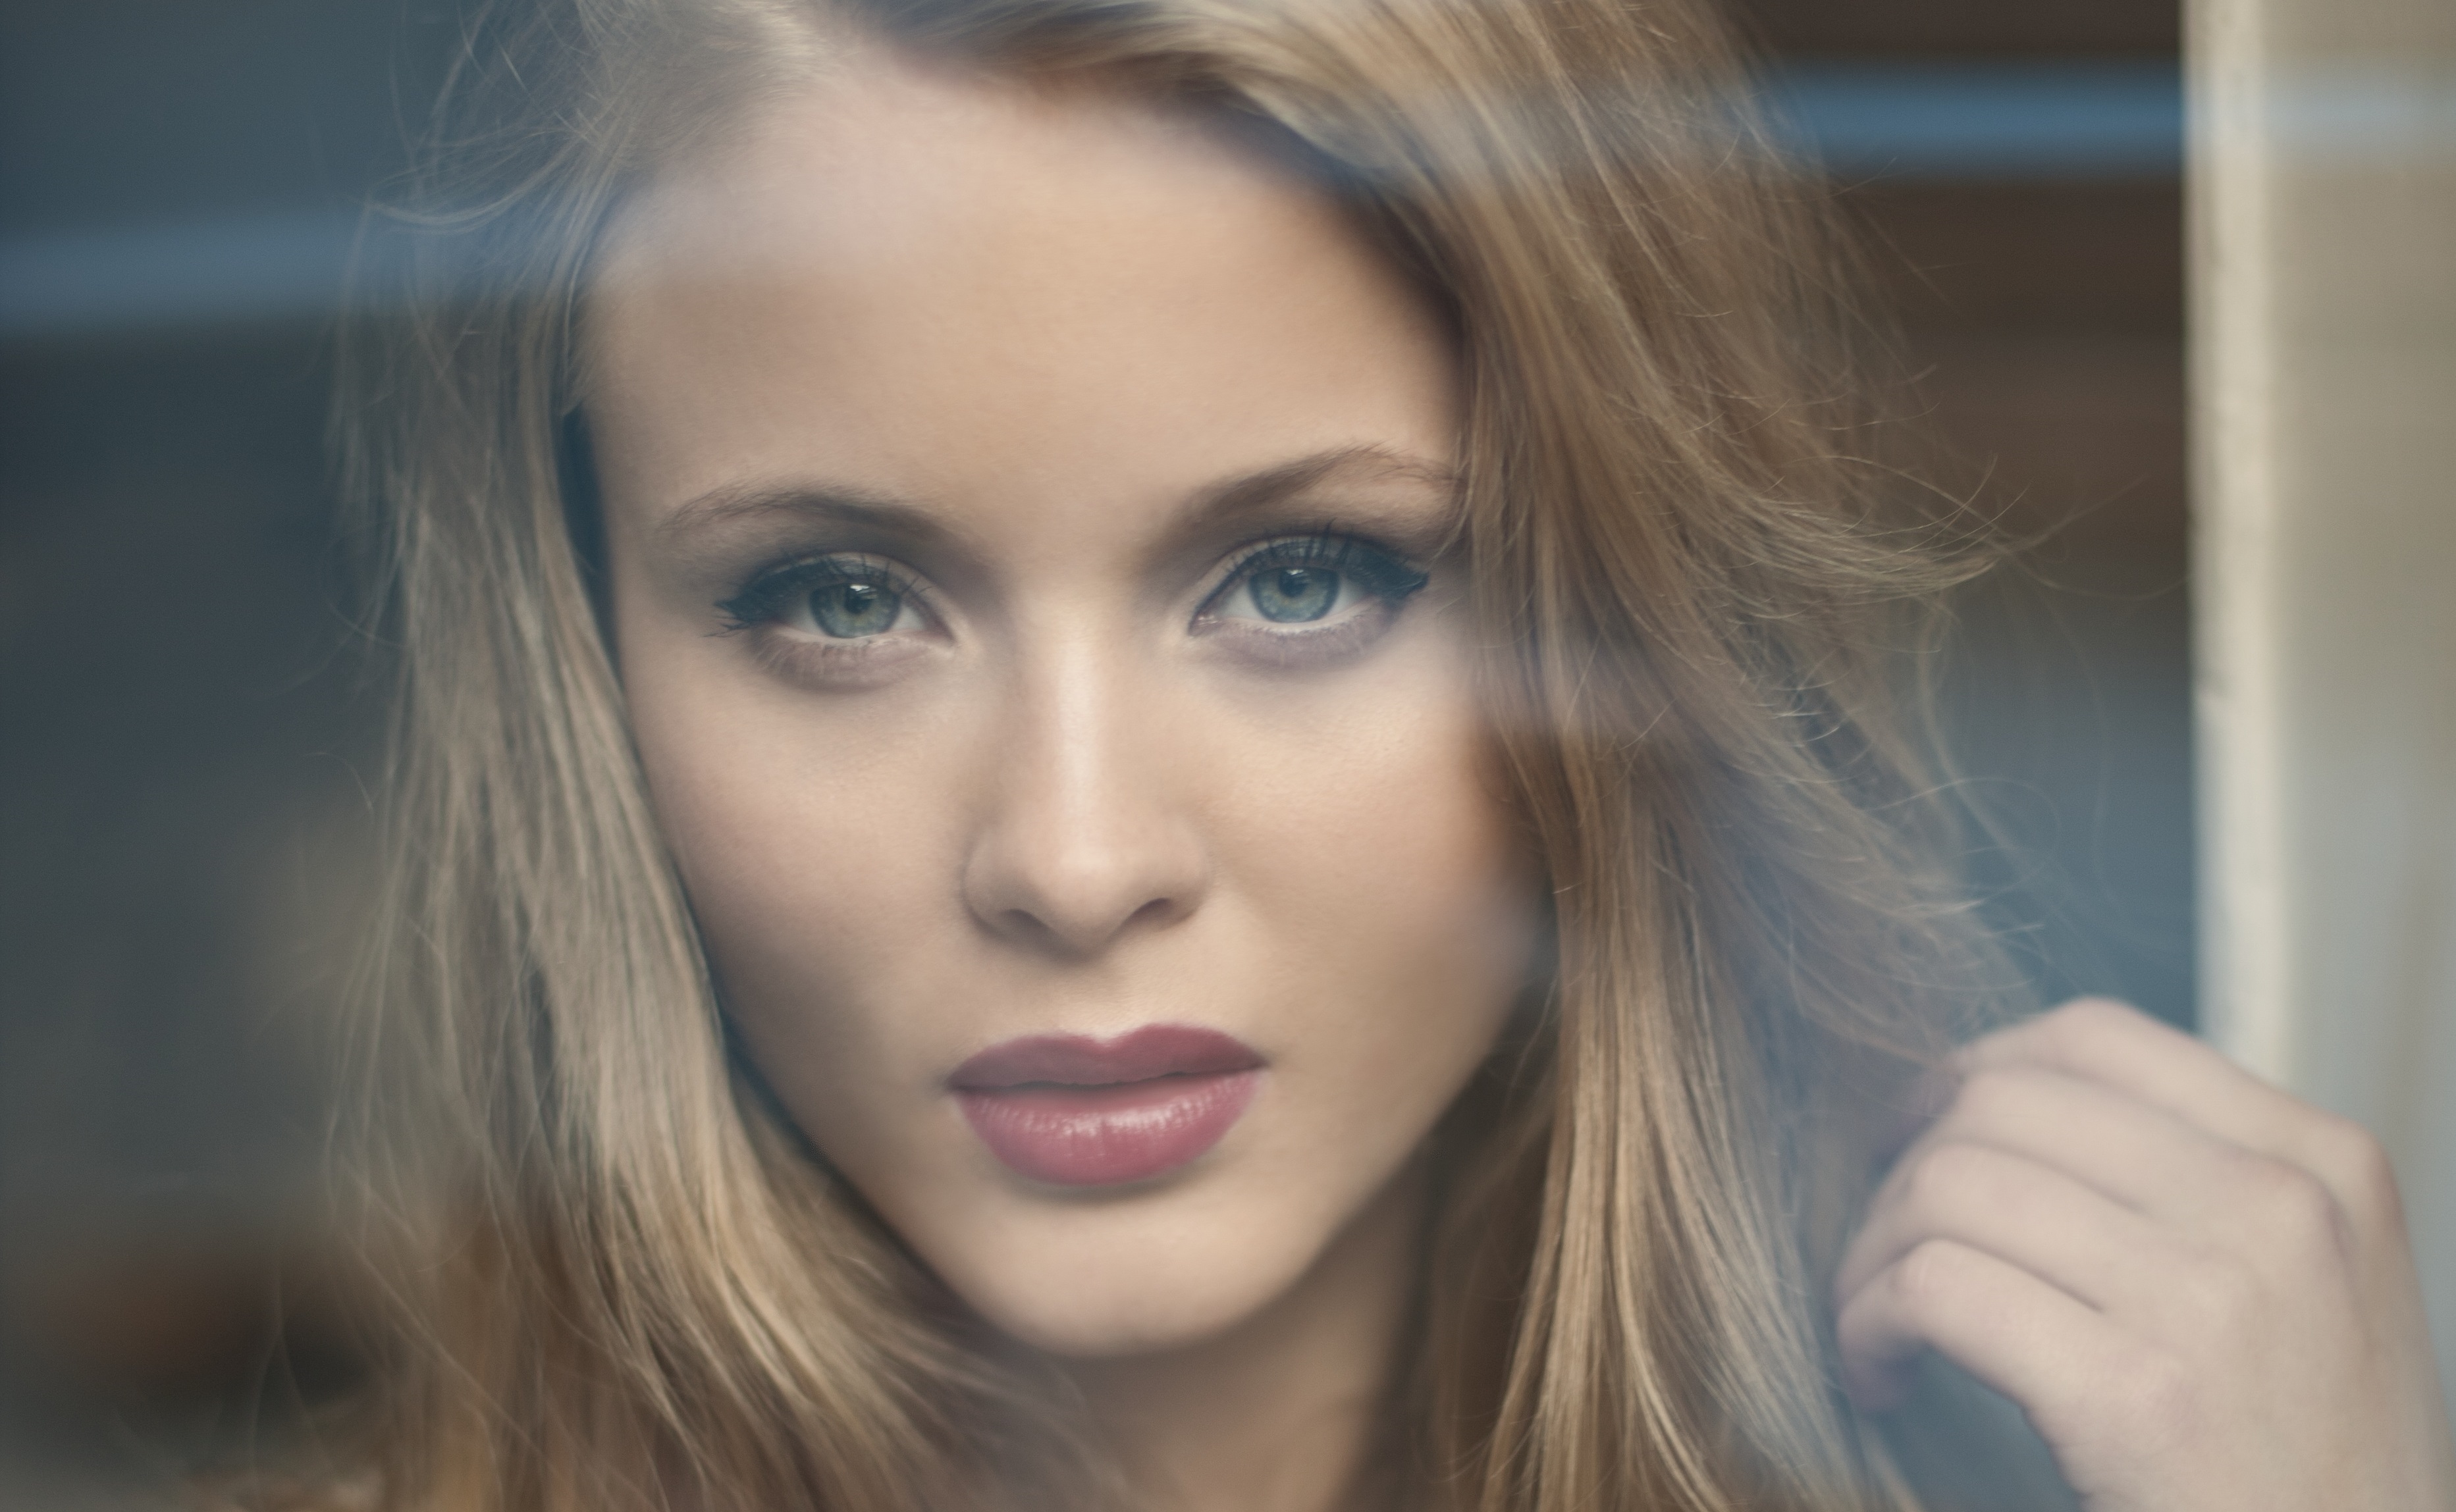 Zara Larsson Blonde Face Lipstick Singer Swedish Close Up 3730x2297